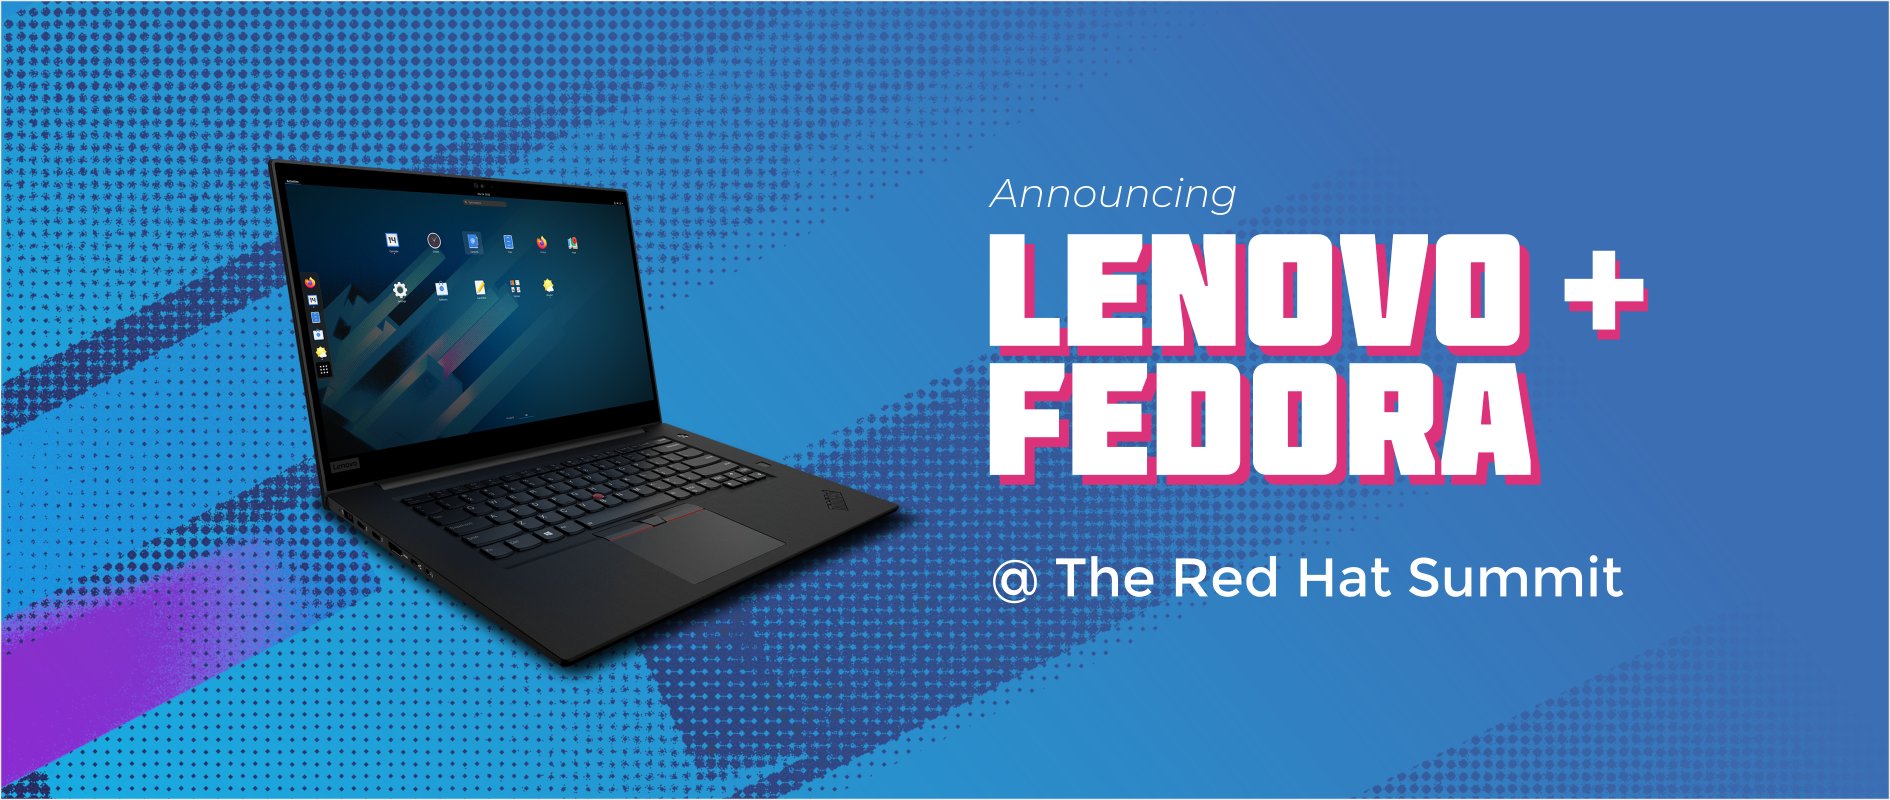 Coming soon: Fedora on Lenovo laptops! - Fedora Magazine